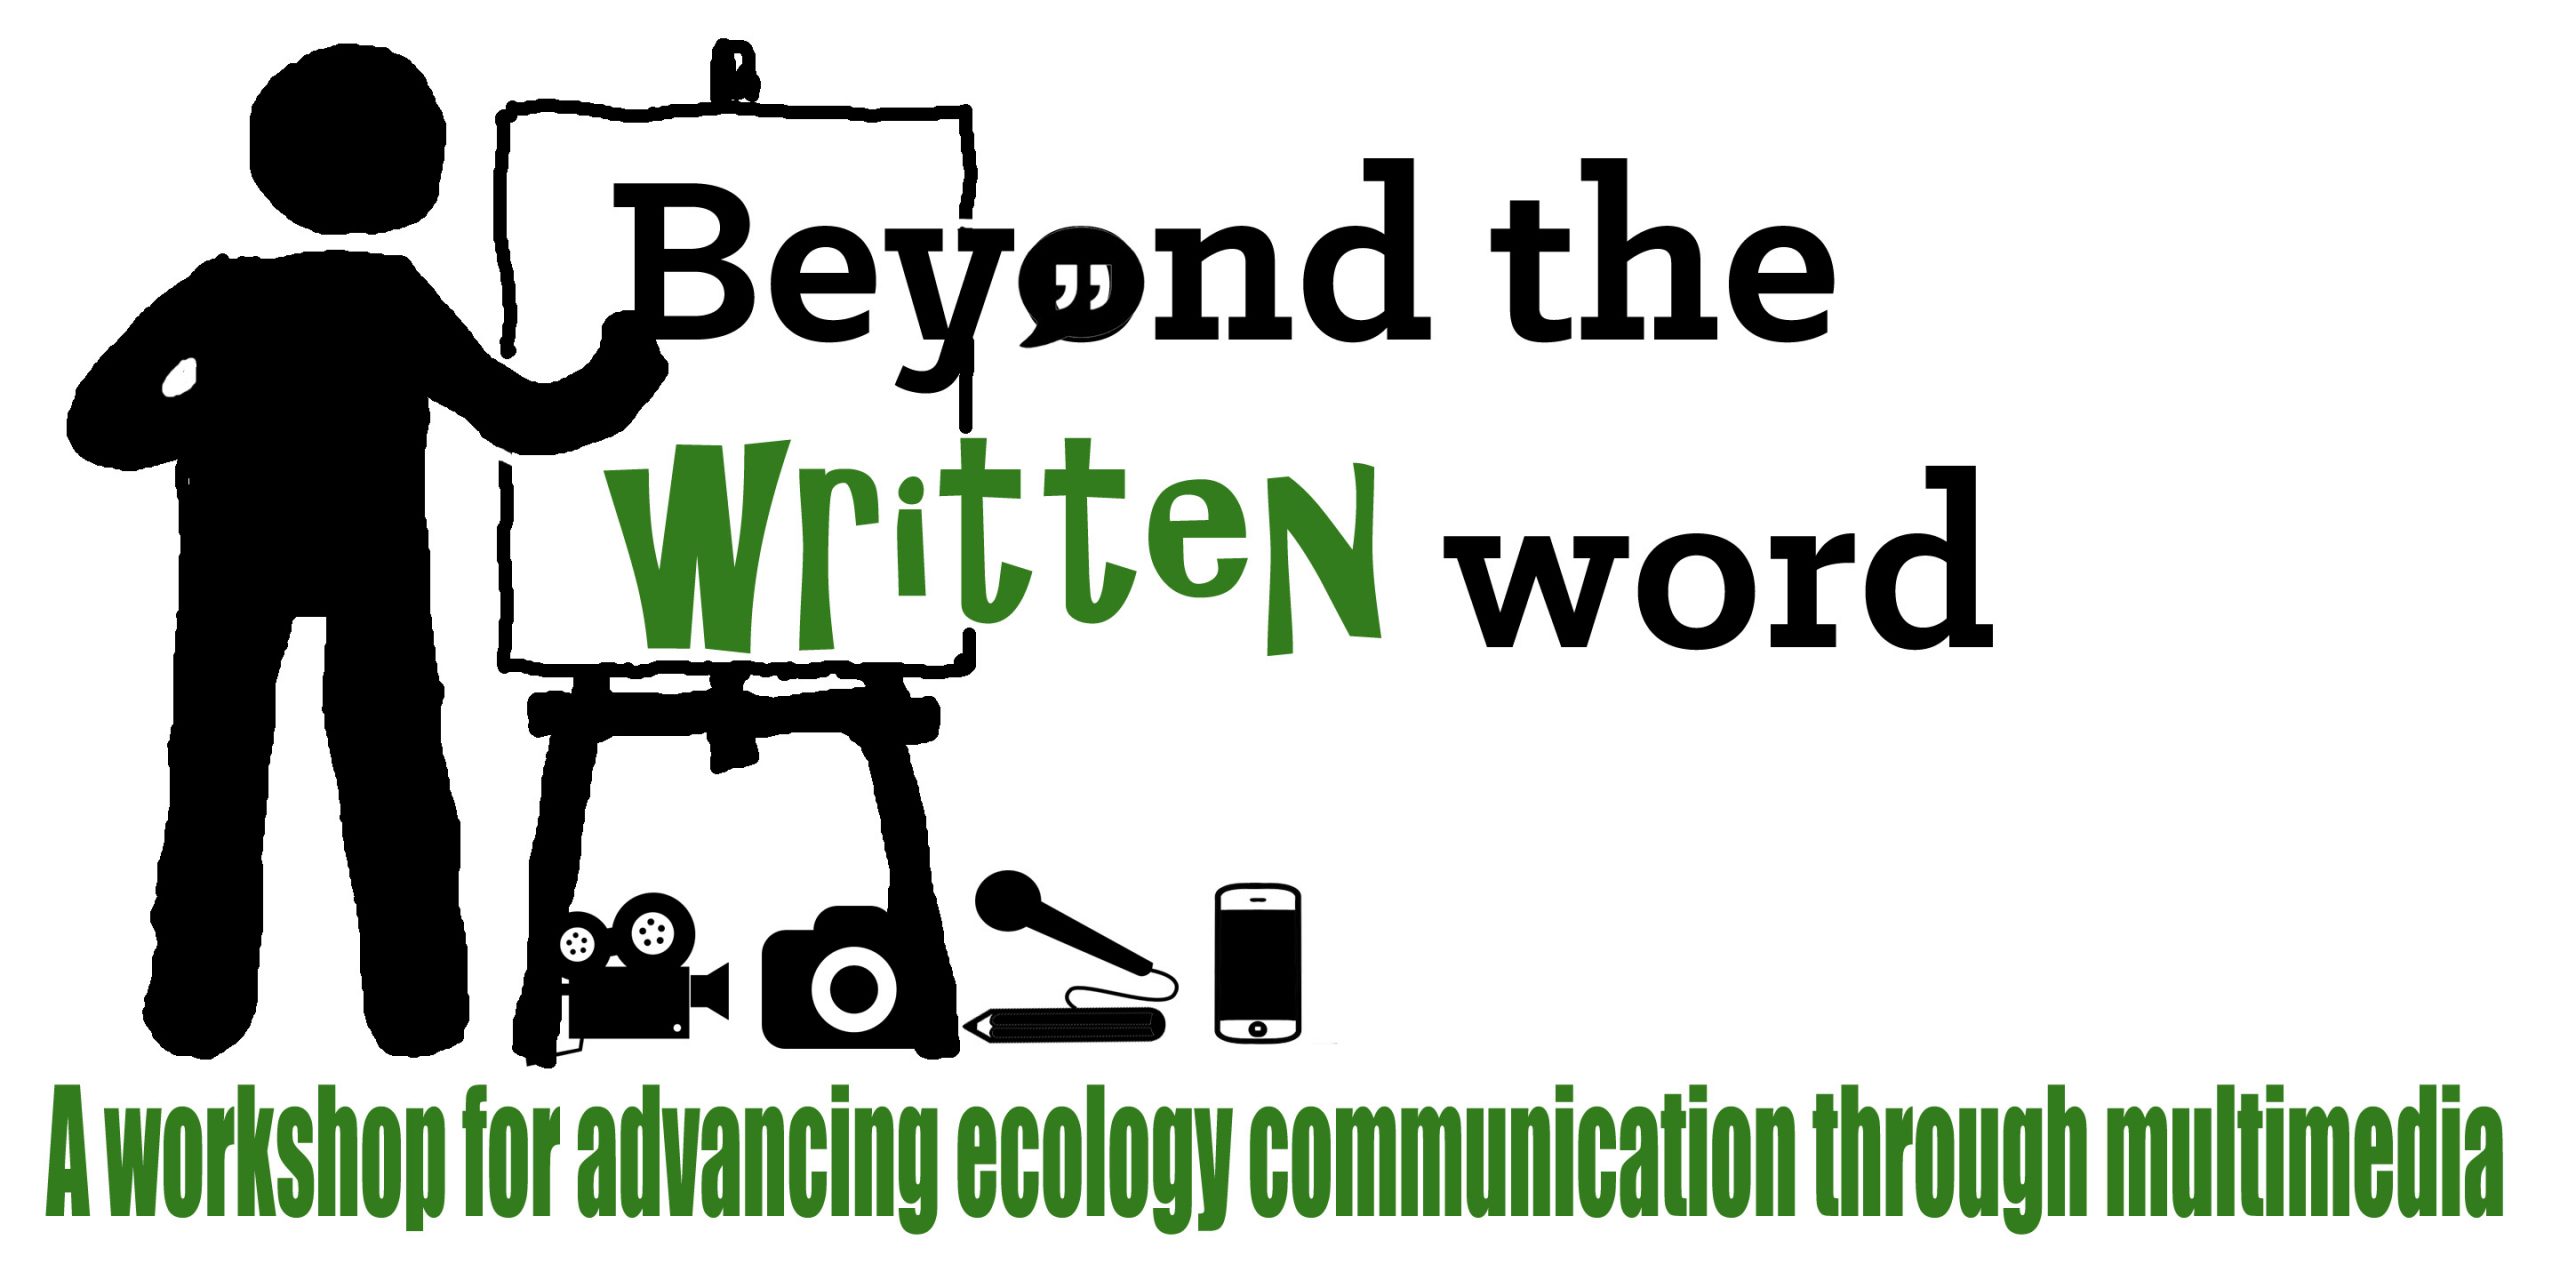 Beyond the Written Word: Advancing ecology communication through multimedia